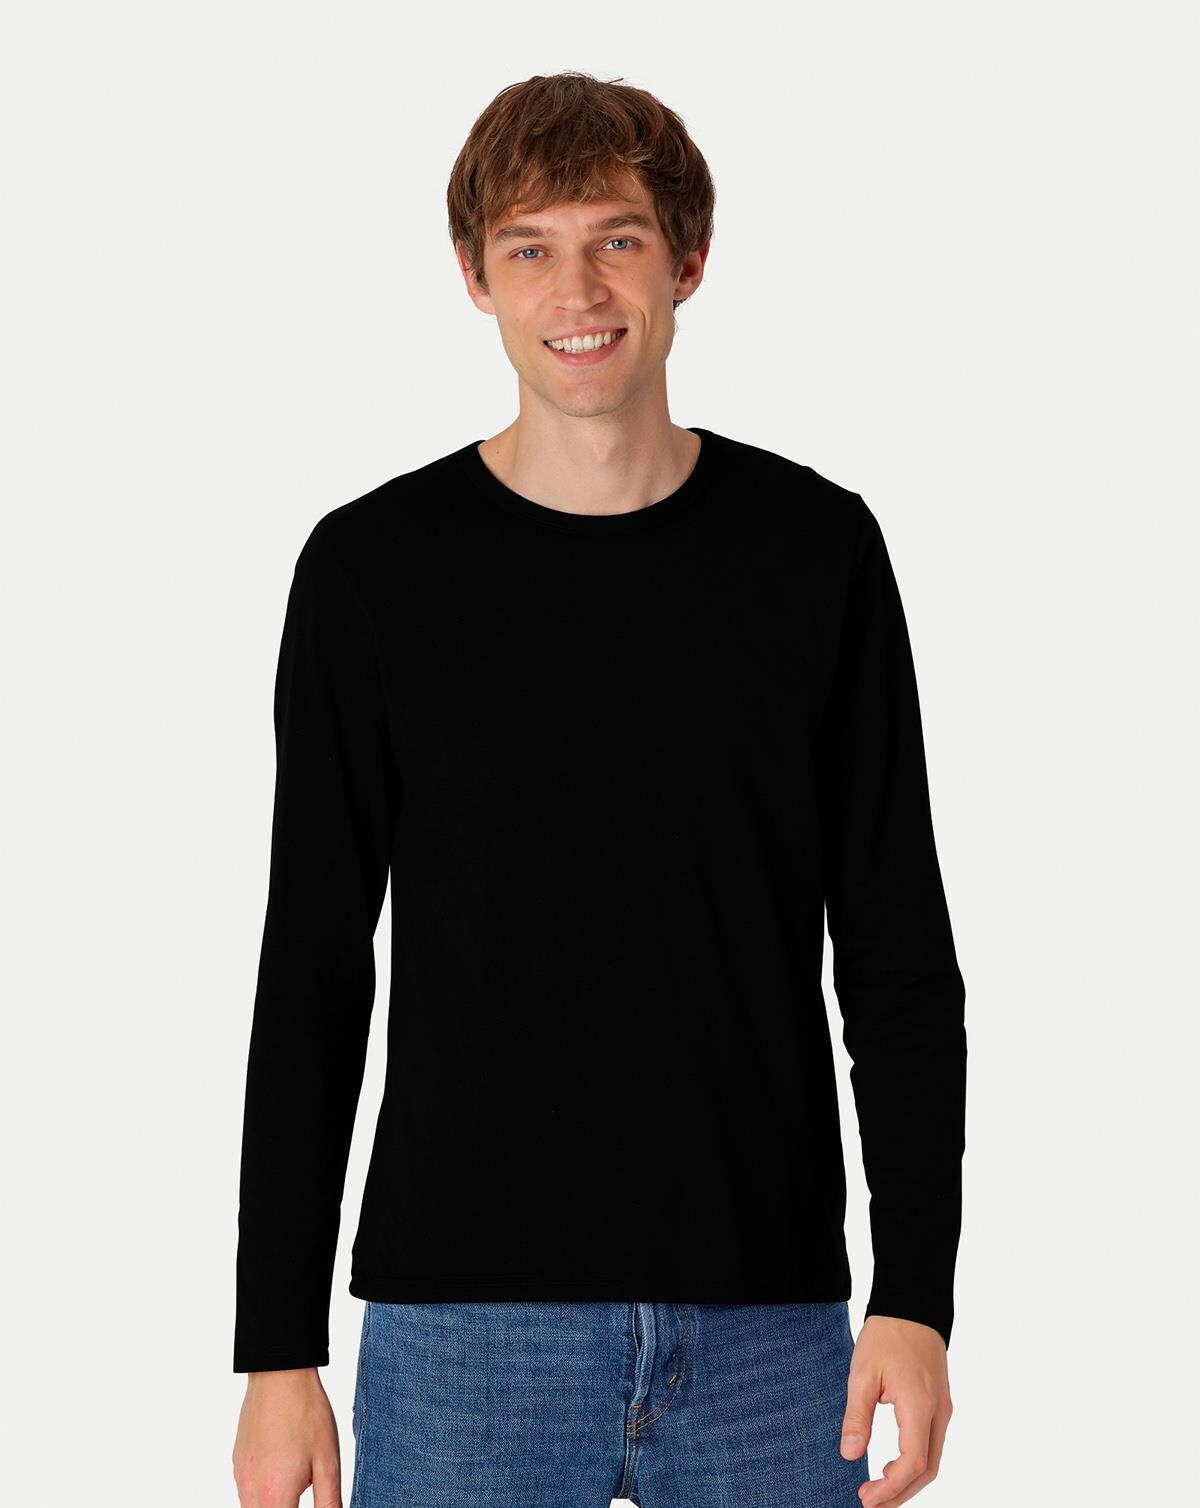 Neutral Organic - Mens Long Sleeve T-shirt (Sort, S)